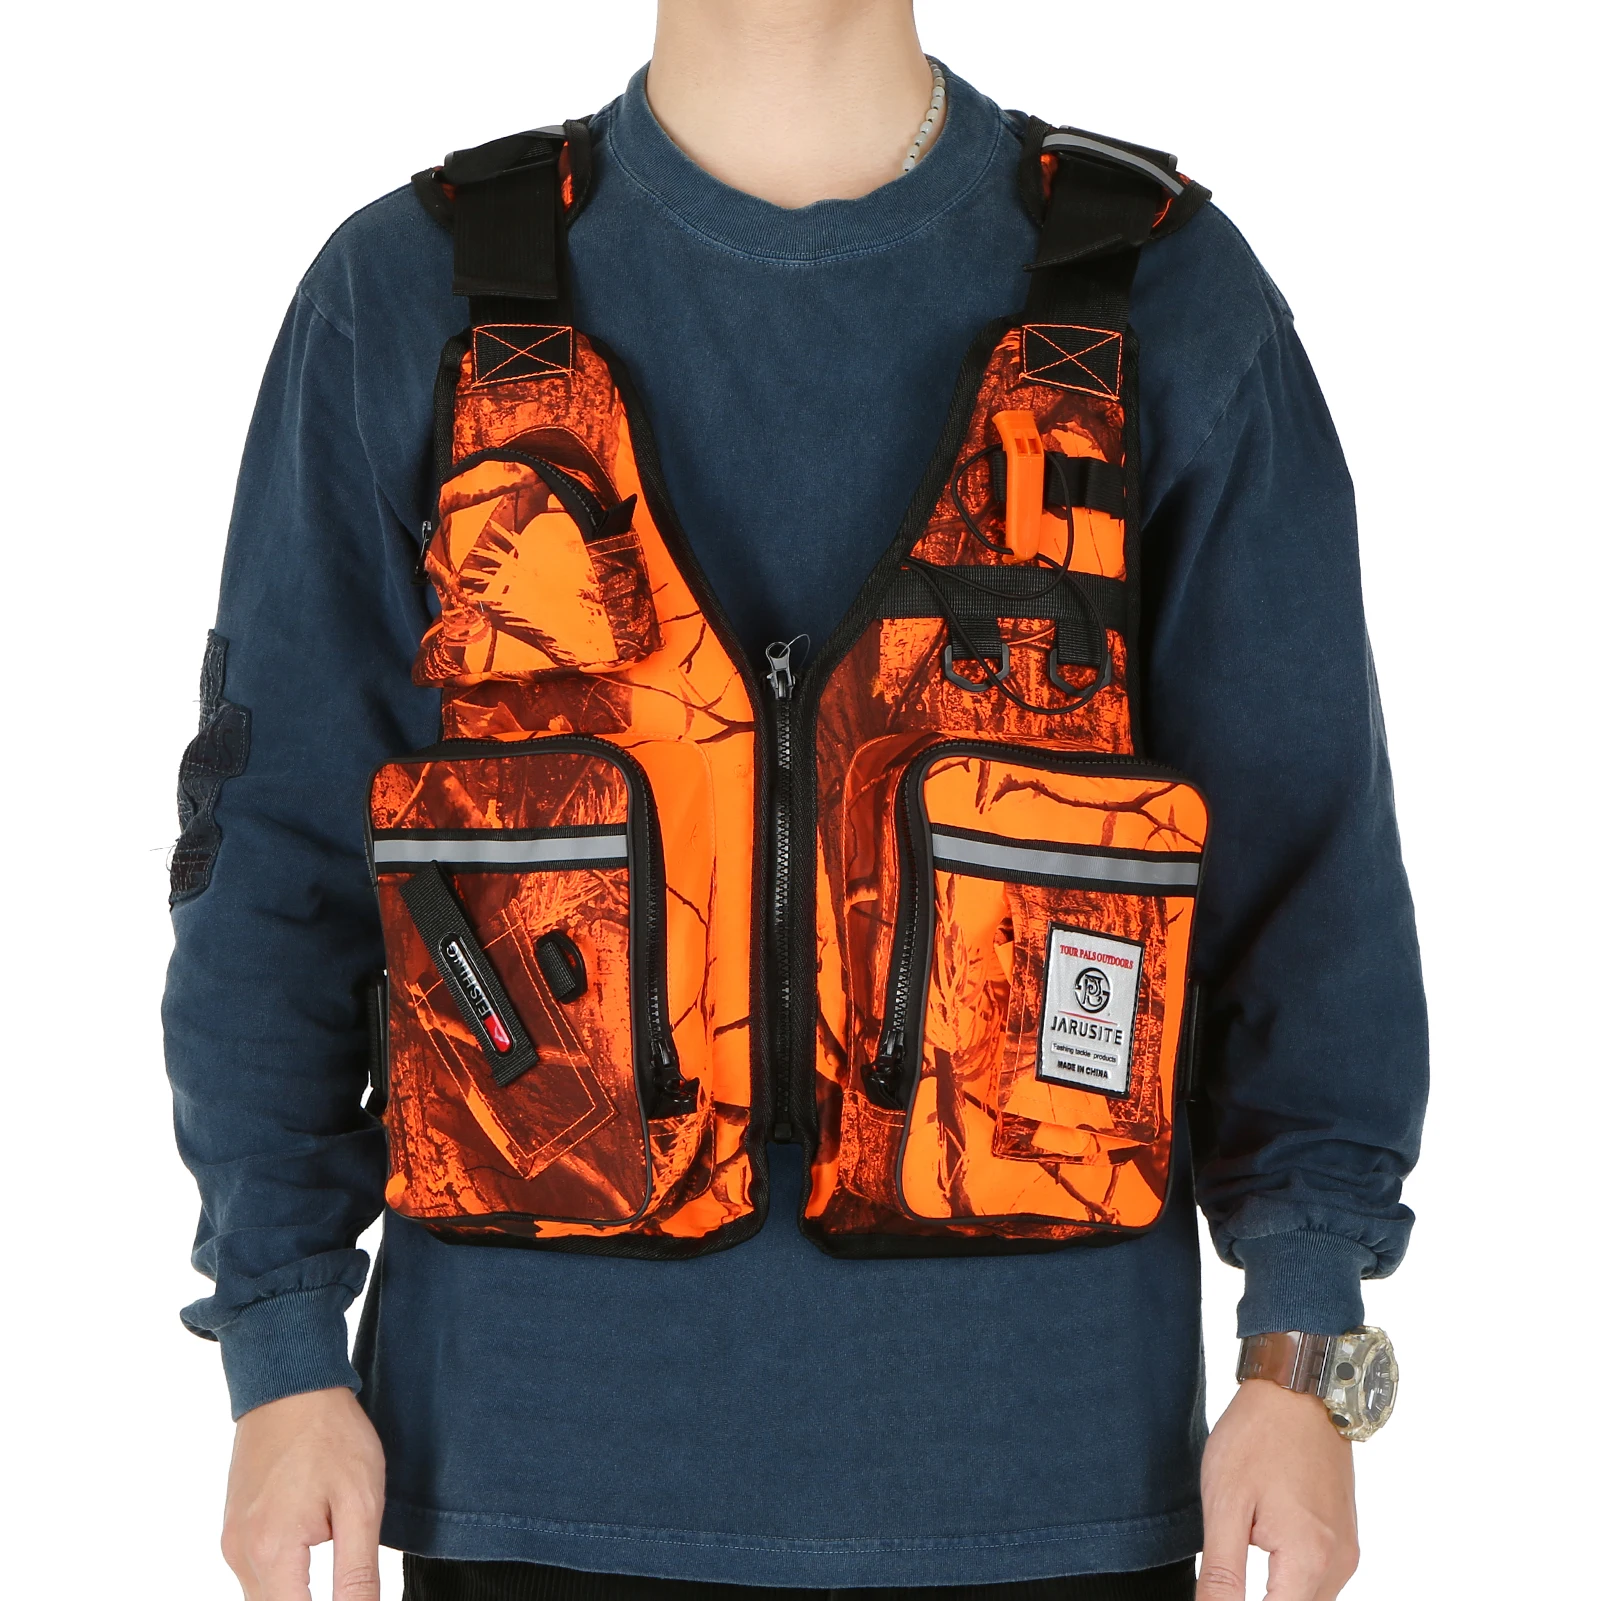 JARUSITE Fishing Vest Fly Fishing Jacket Buoyancy Vest with Water